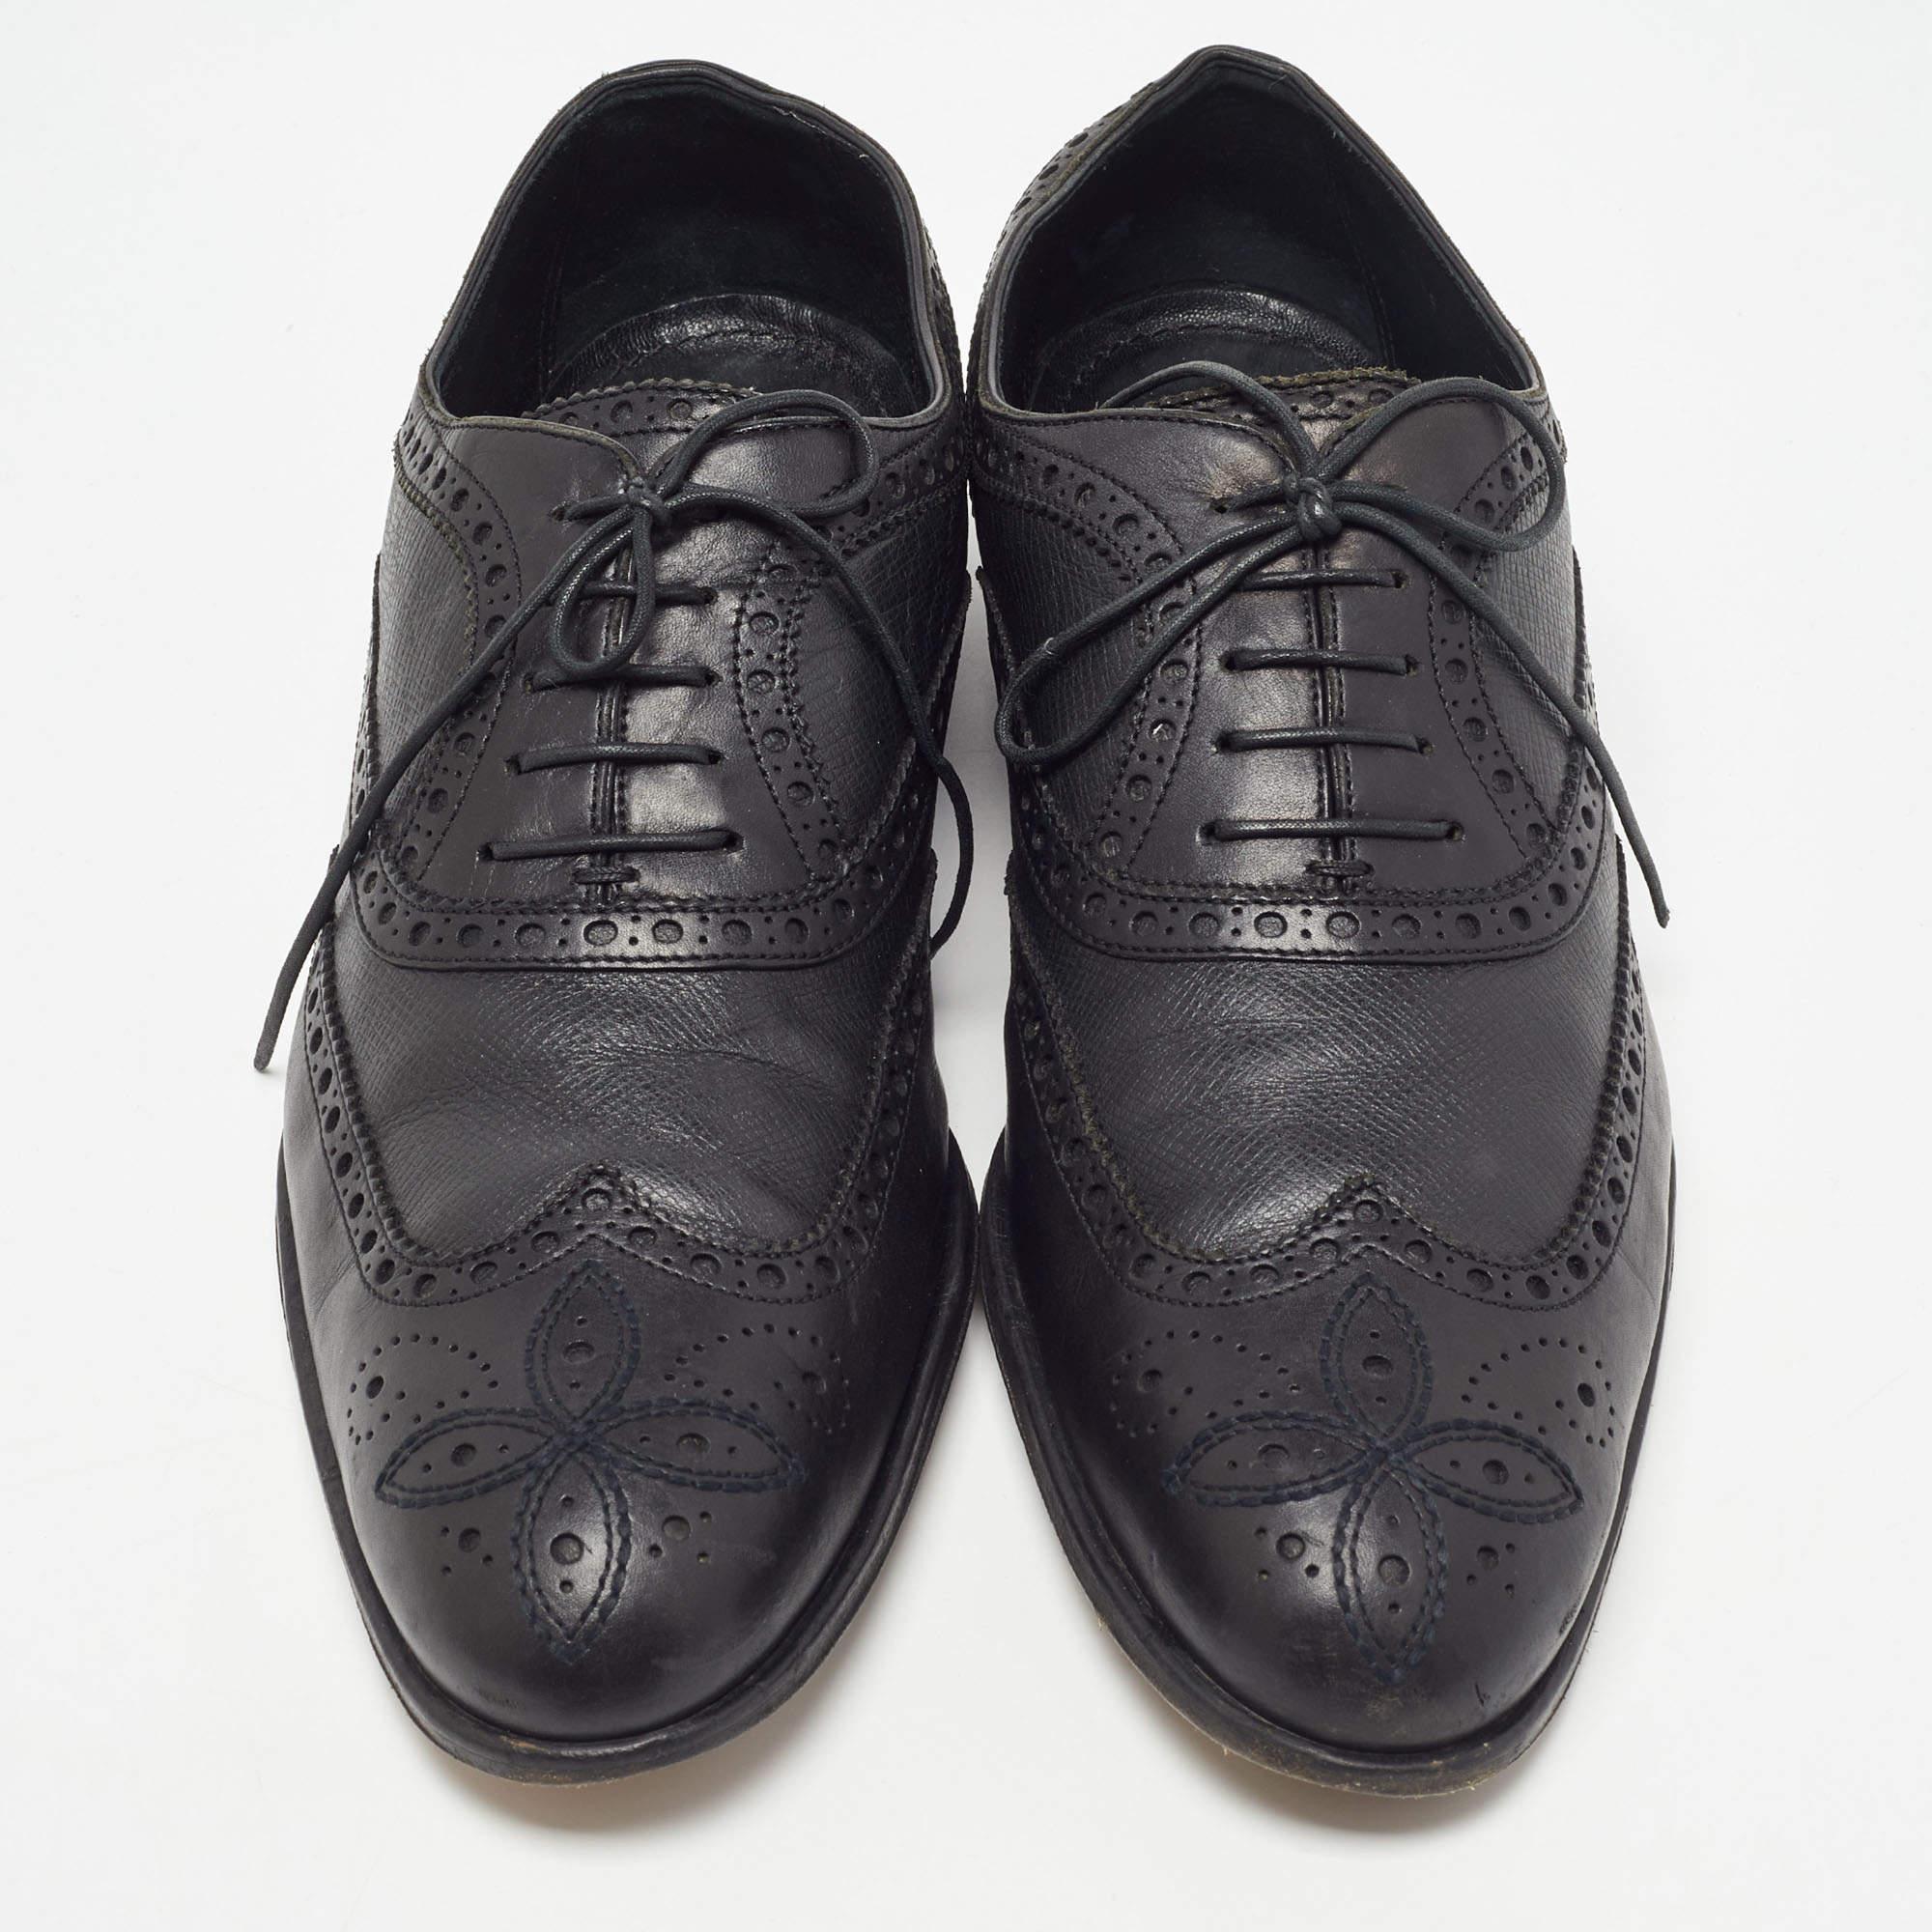 Louis Vuitton Black Brogue Leather Lace Up Oxfords Size 43 In Good Condition For Sale In Dubai, Al Qouz 2